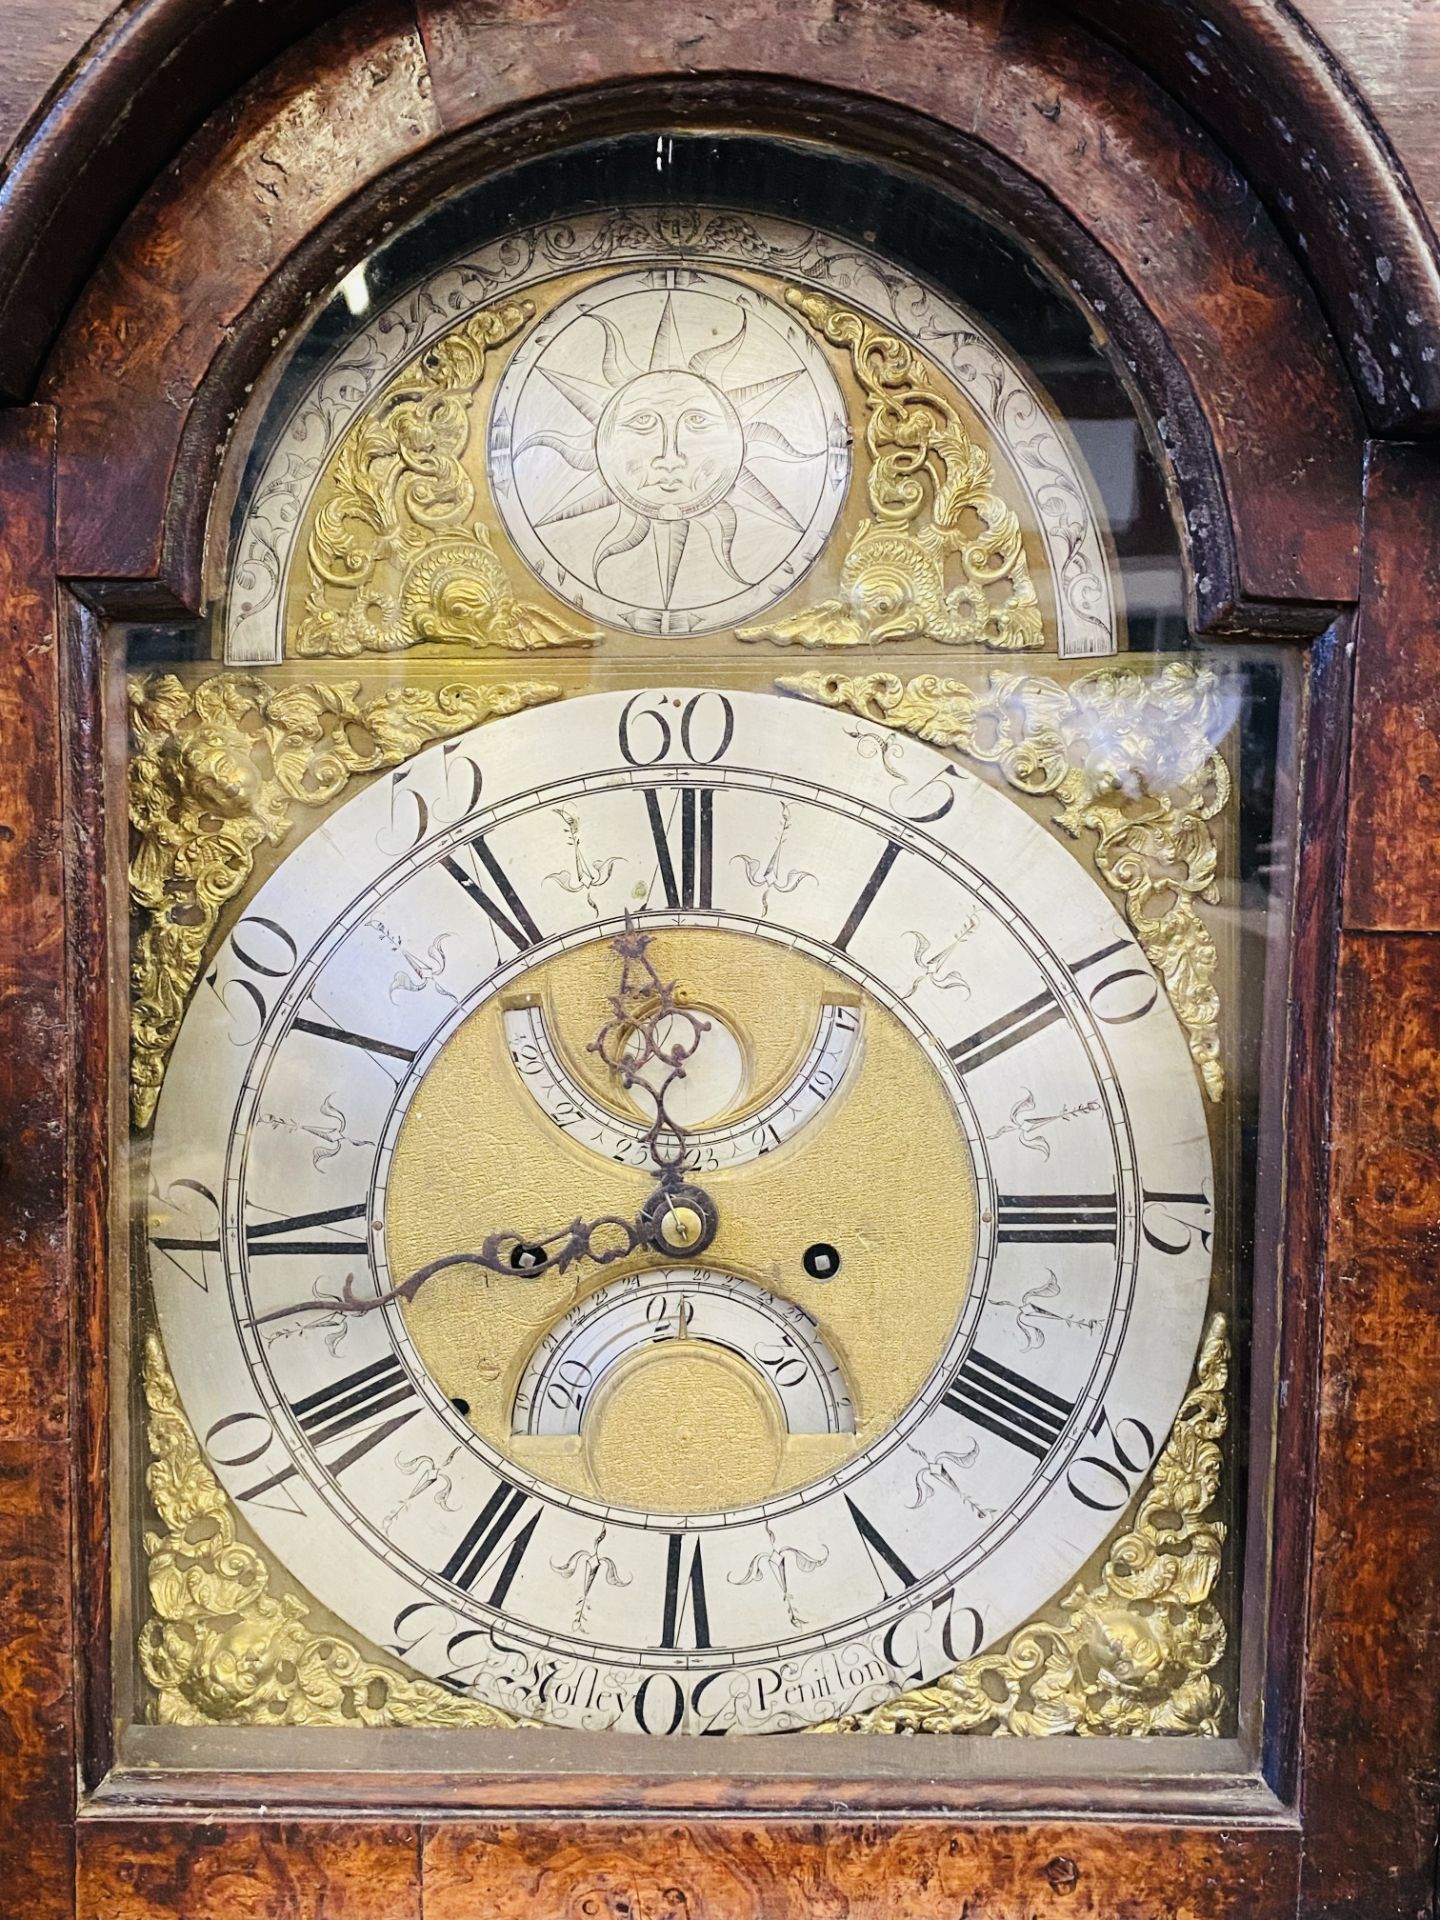 18th century longcase clock - Image 3 of 7